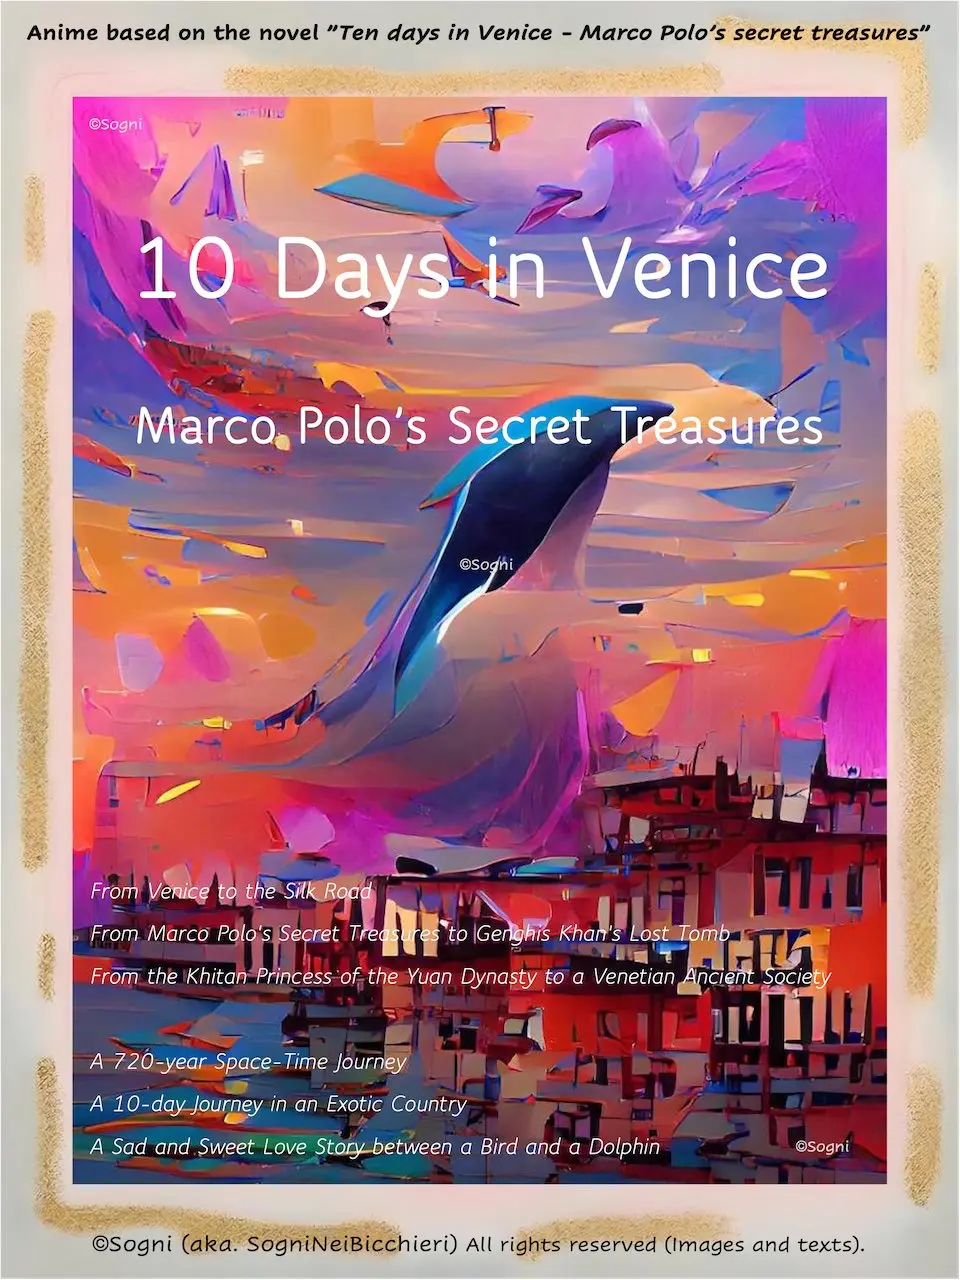 10 days in Venice - Marco Polo's secret treasures